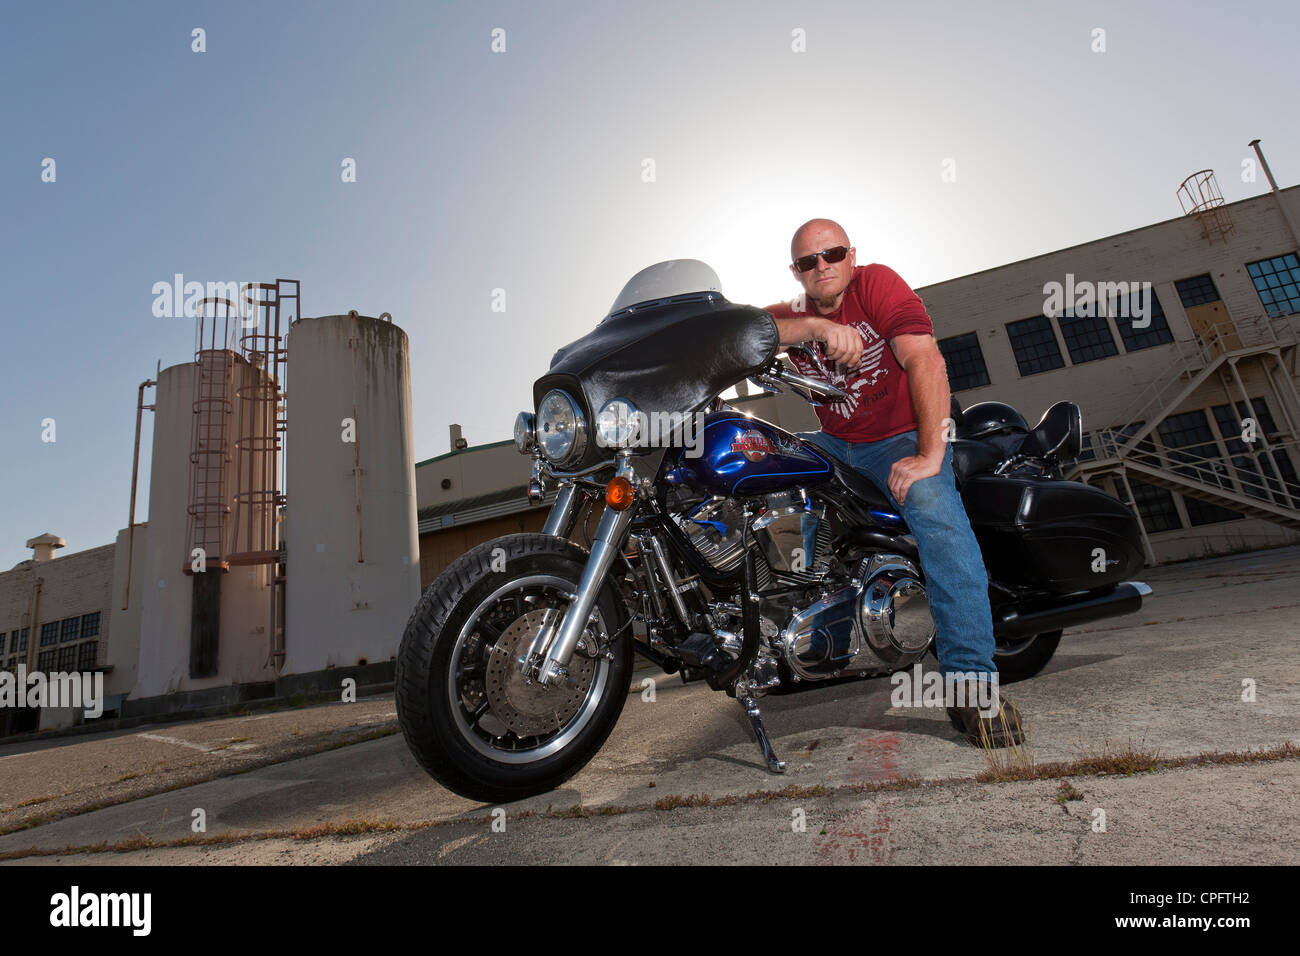 A Harley Davidson motorcyclist sitting on his bike Stock Photo